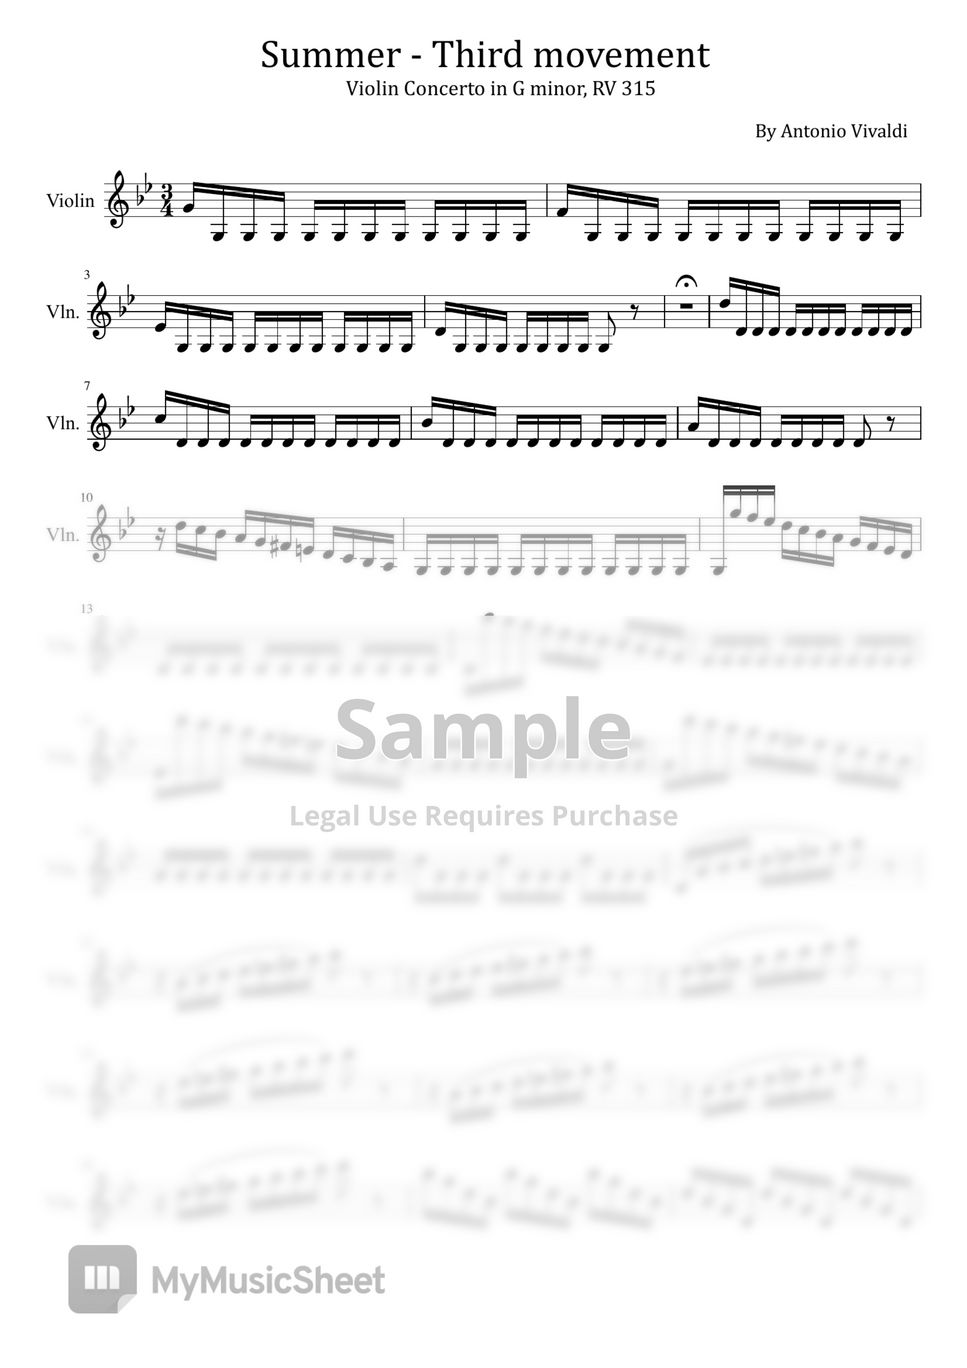 Antonio Vivaldi - Summer - Third movement - For Volin Solo (维瓦尔第 四季 夏 - Violin Concerto in G minor, RV 315 -  - The Four Seasons - Vivaldi) by poon